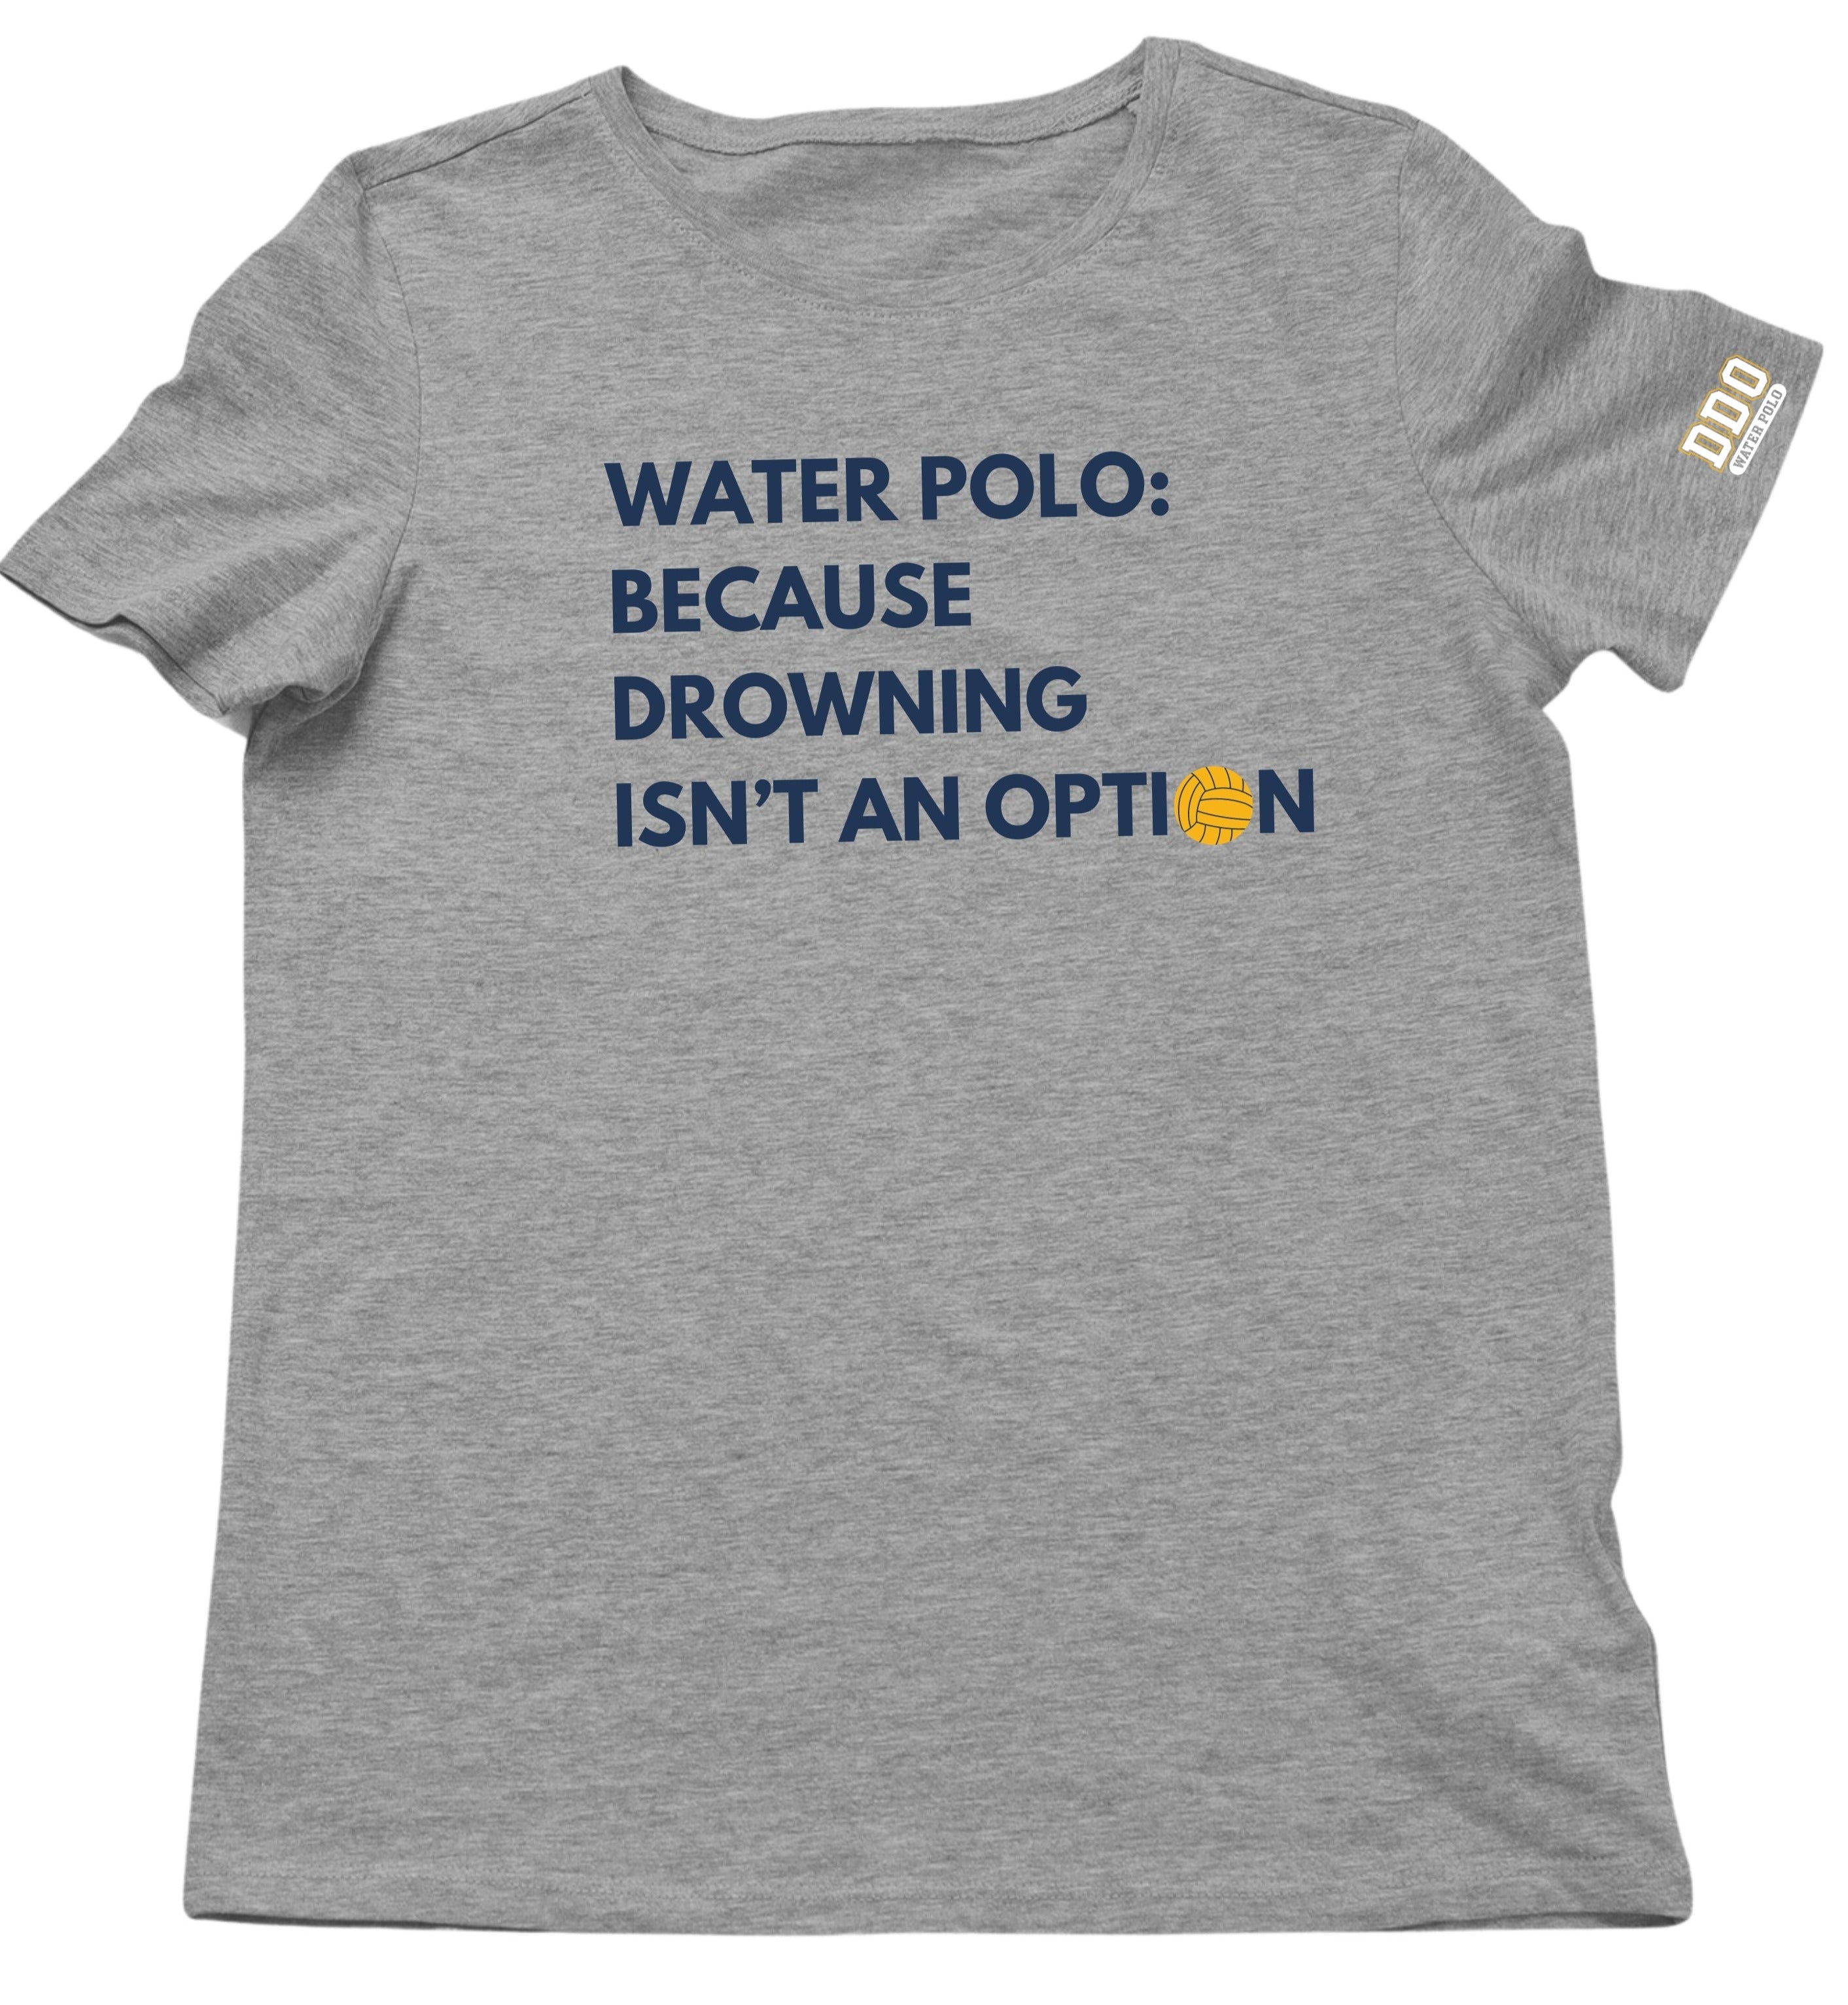 DDO Drowning Isn't An Option T-shirt